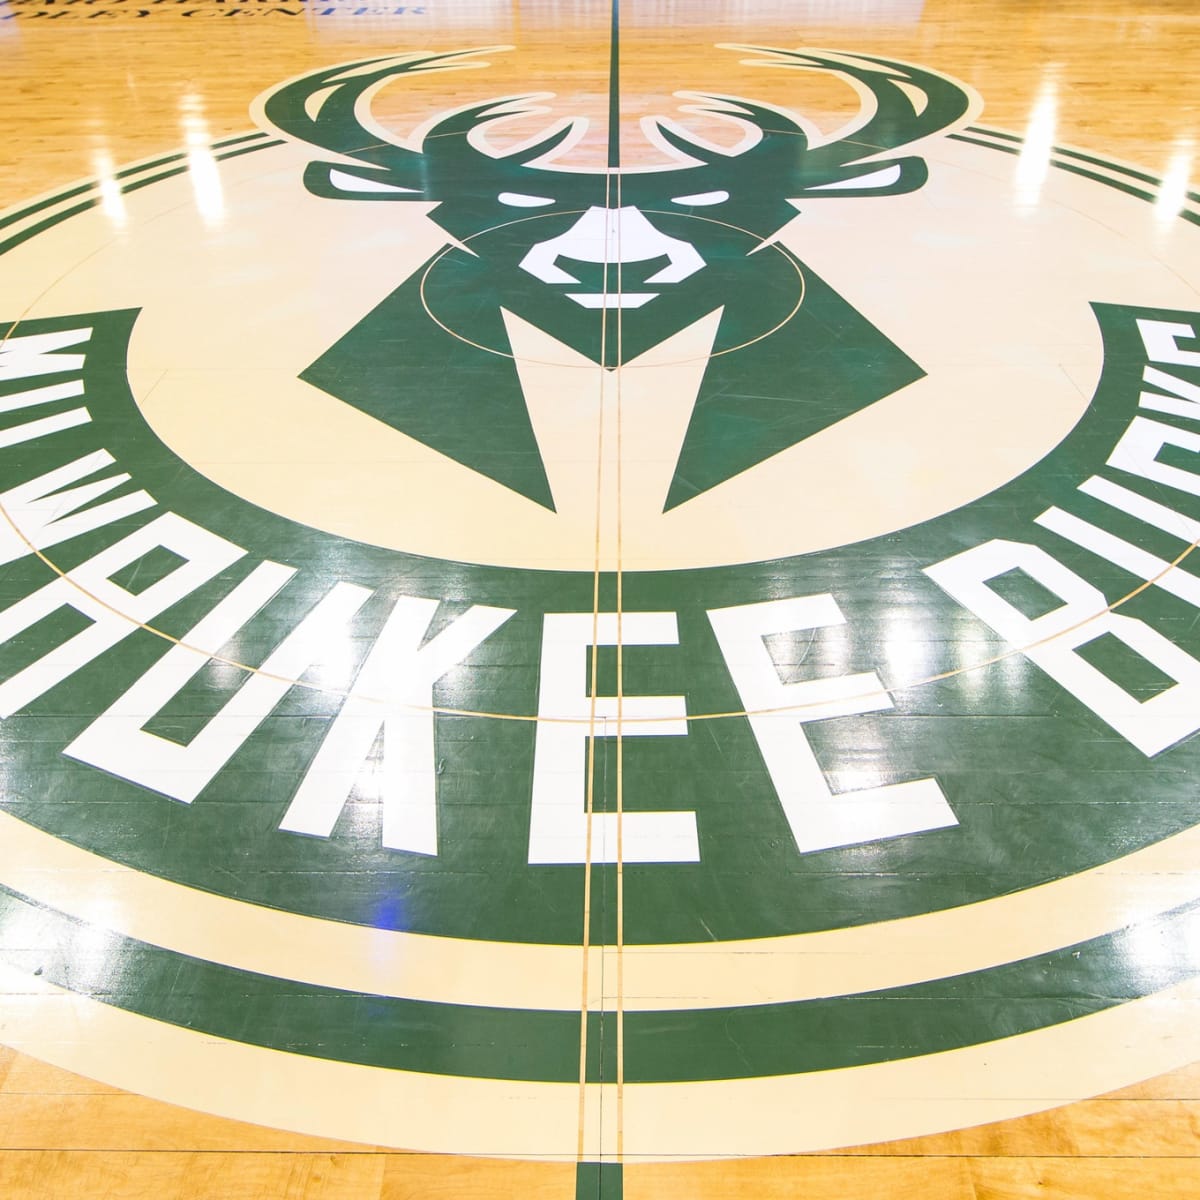 Milwaukee Bucks Unveil New “Fear the Deer” Uniforms for 2022-23 Season